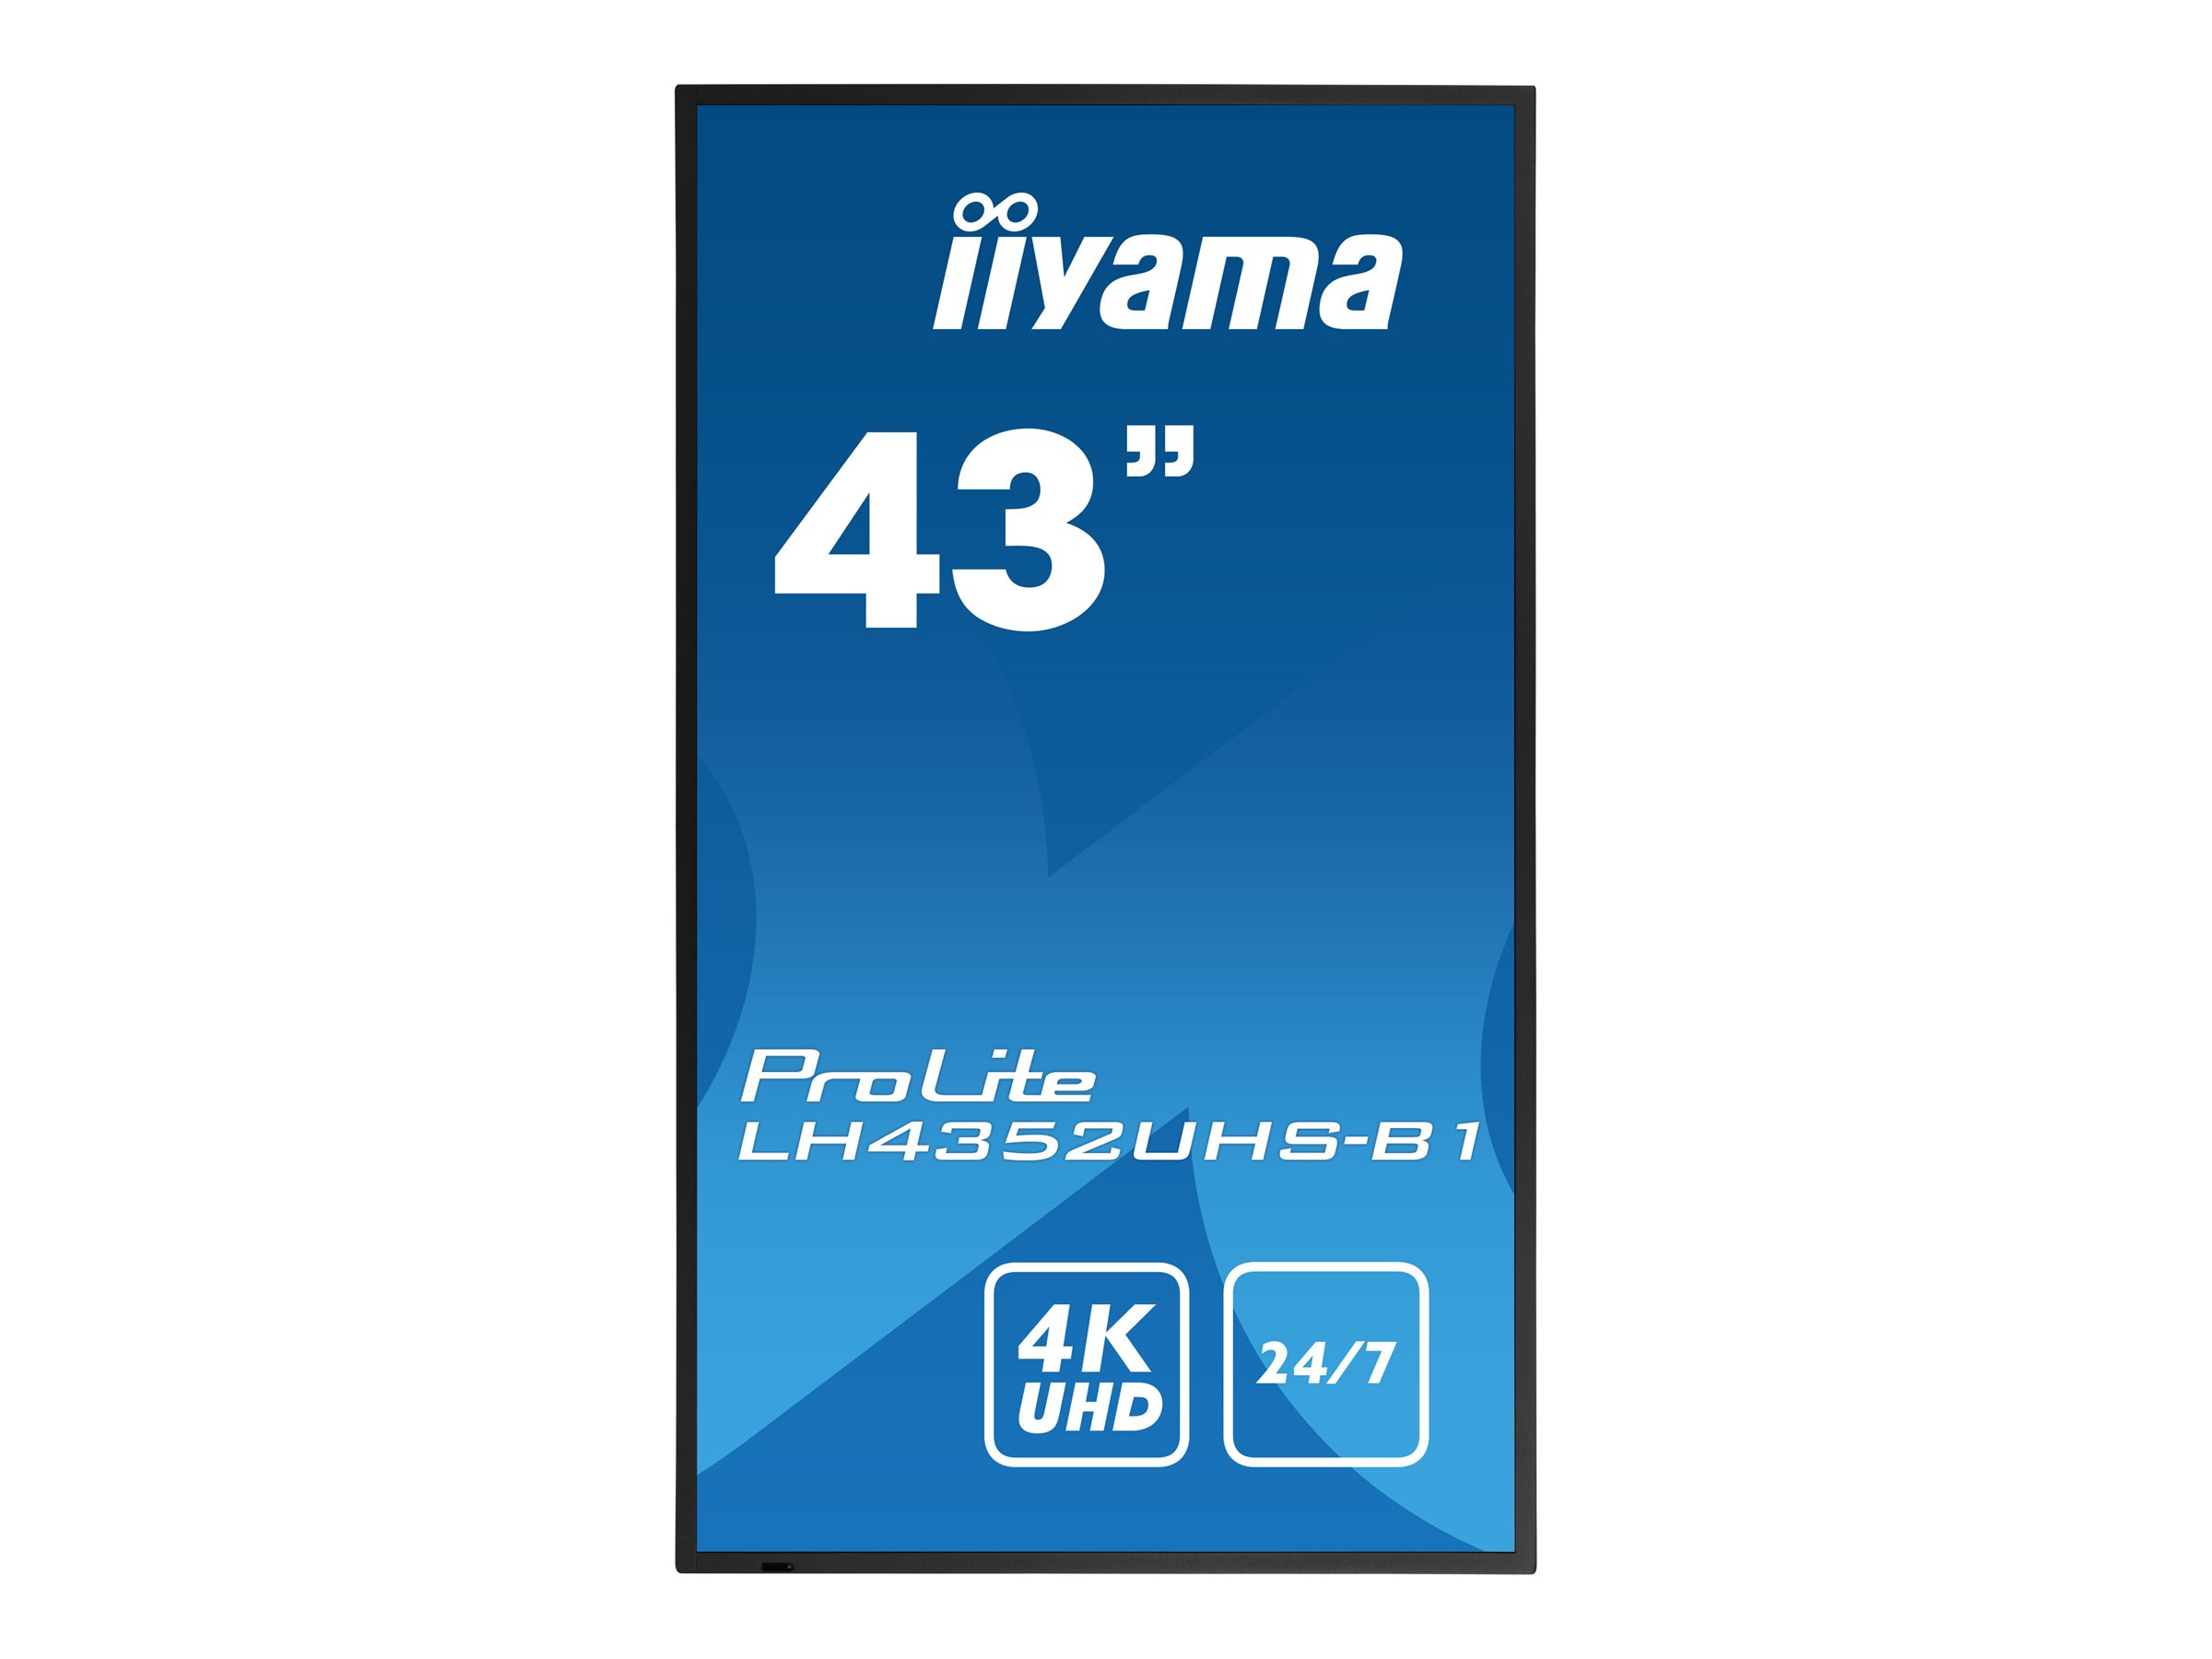 Iiyama LH4352UHS-B1, 43\" LCD 4K UHD, SDM-S